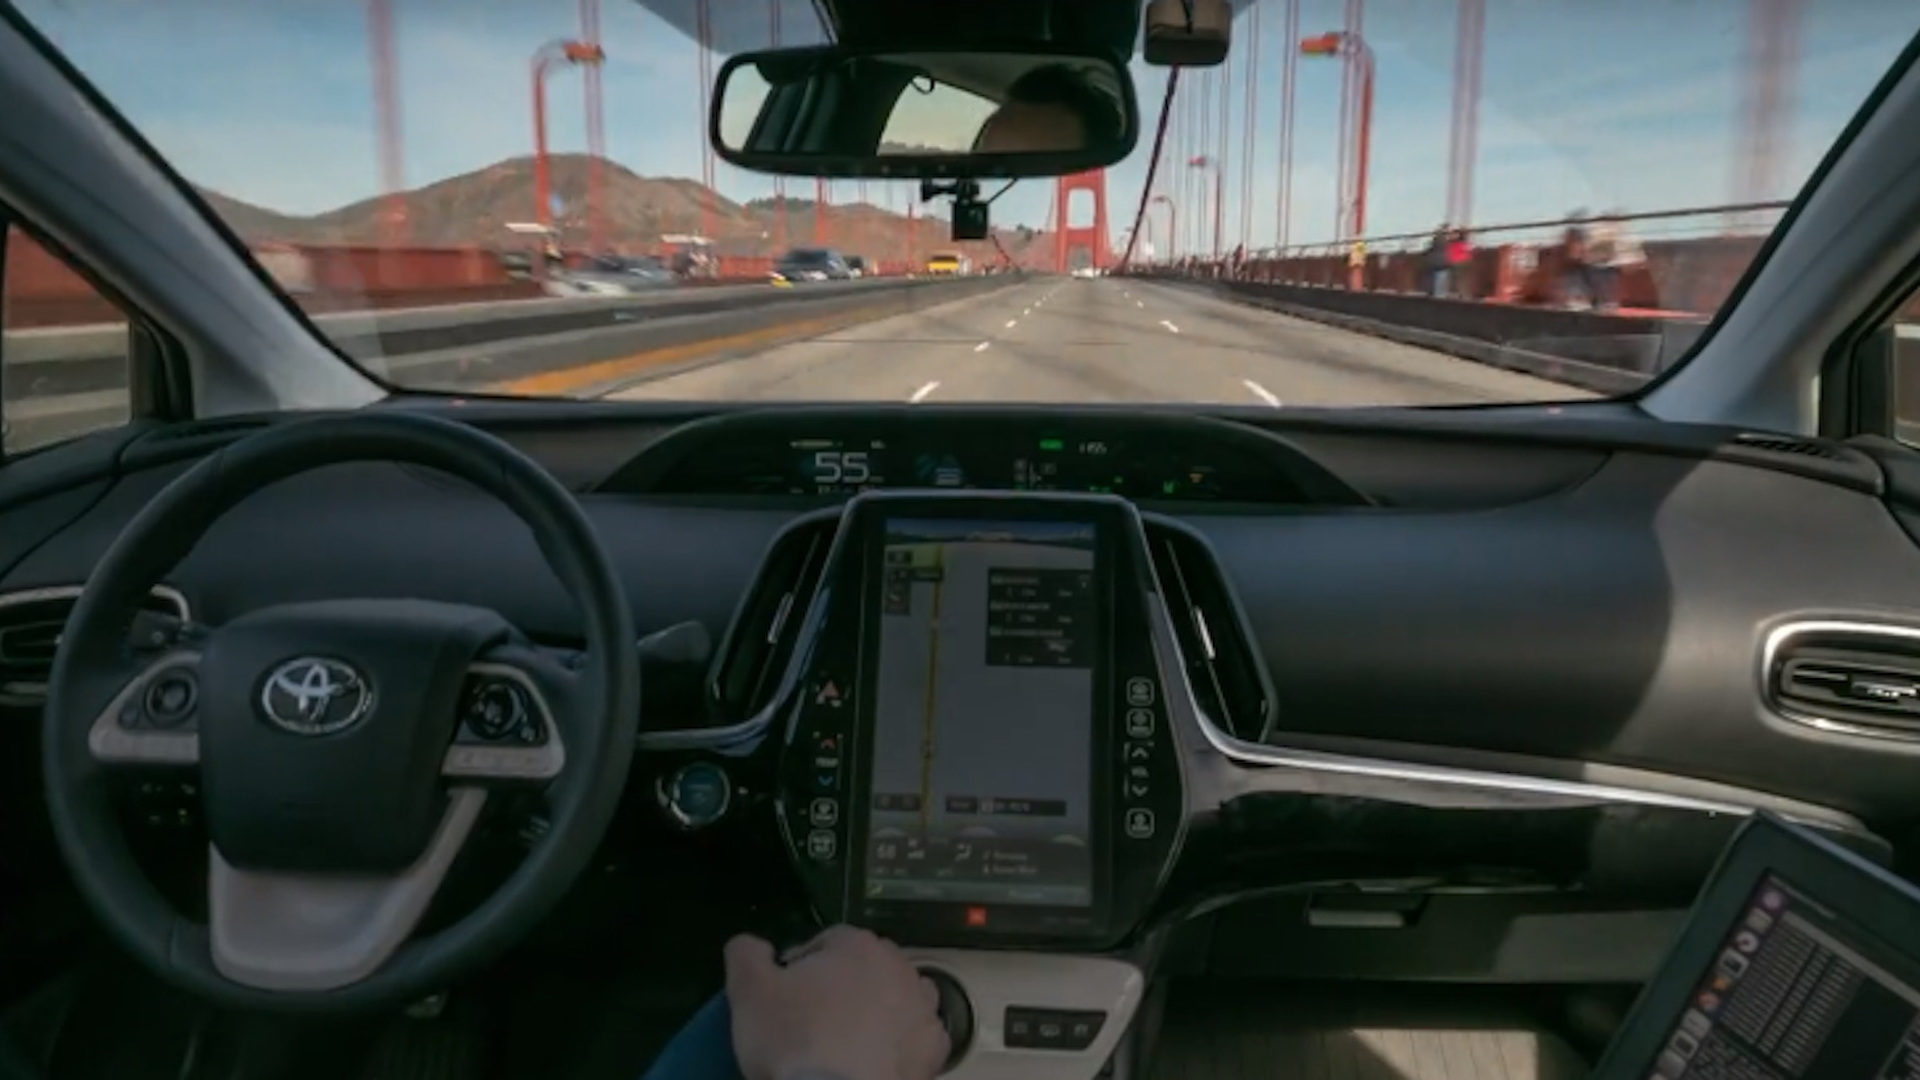 Pronto.AI self-driving car system